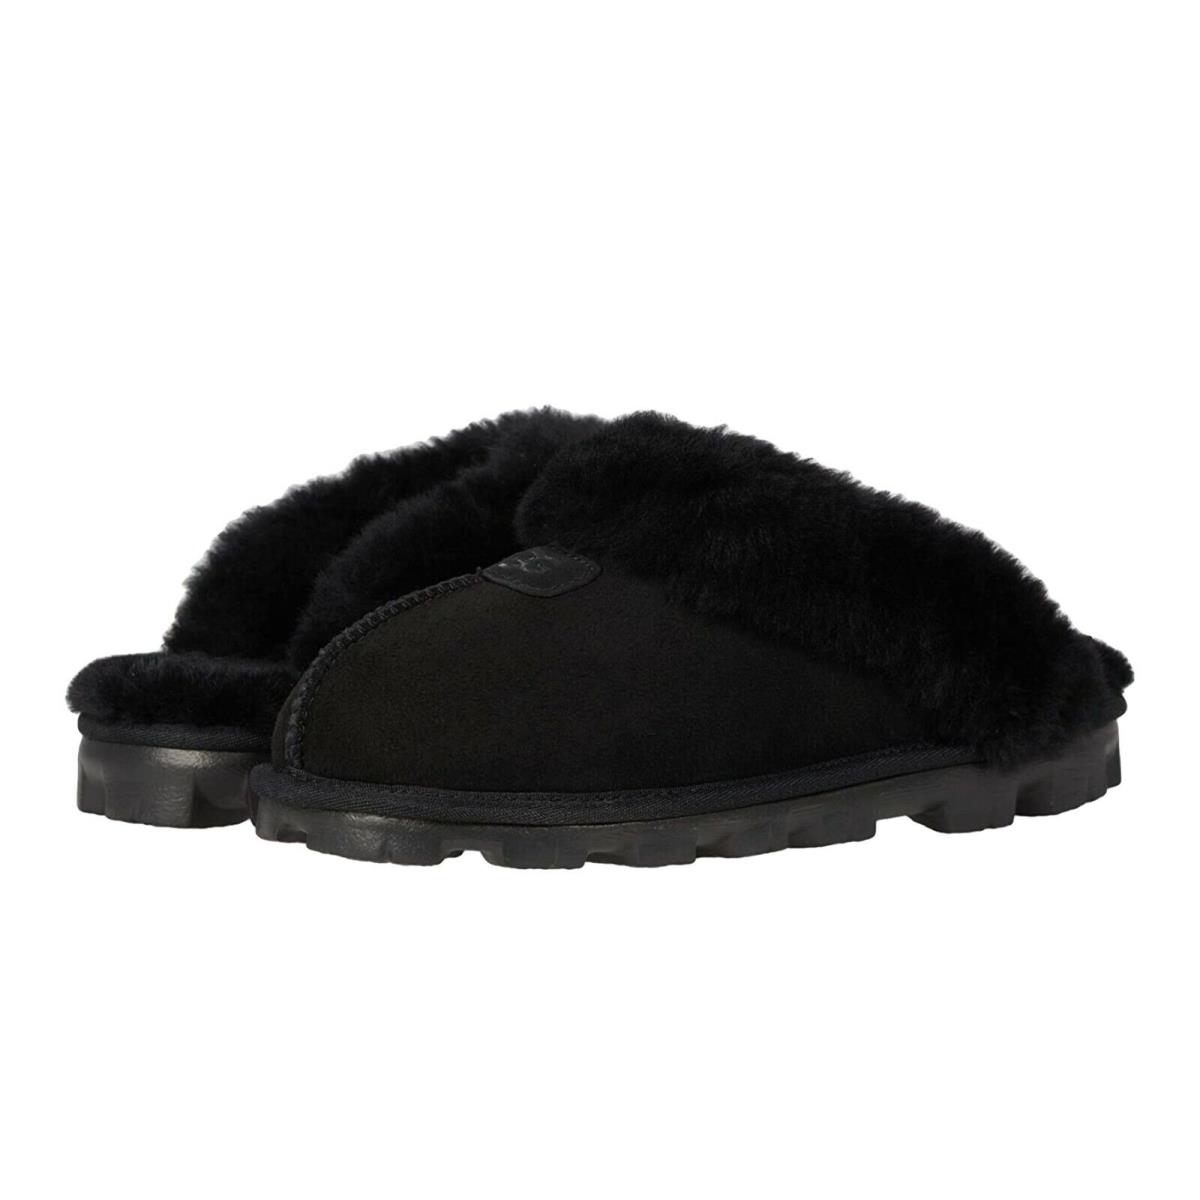 Ugg Women`s Shoes Coquette Soft Cozy Slippers Sandals Black Chestnut Grey Black